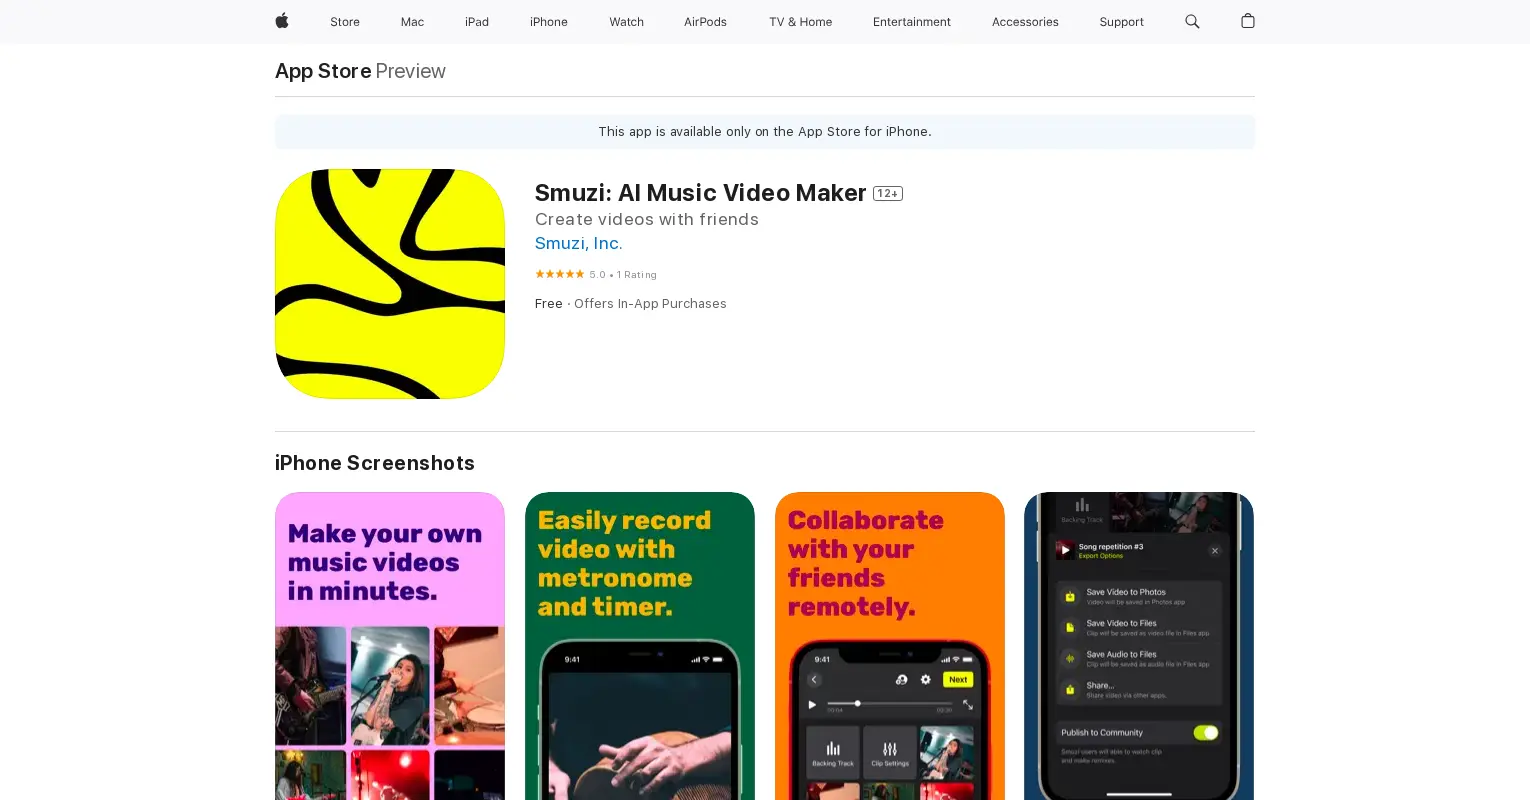 Smuzi: AI Music Video Maker